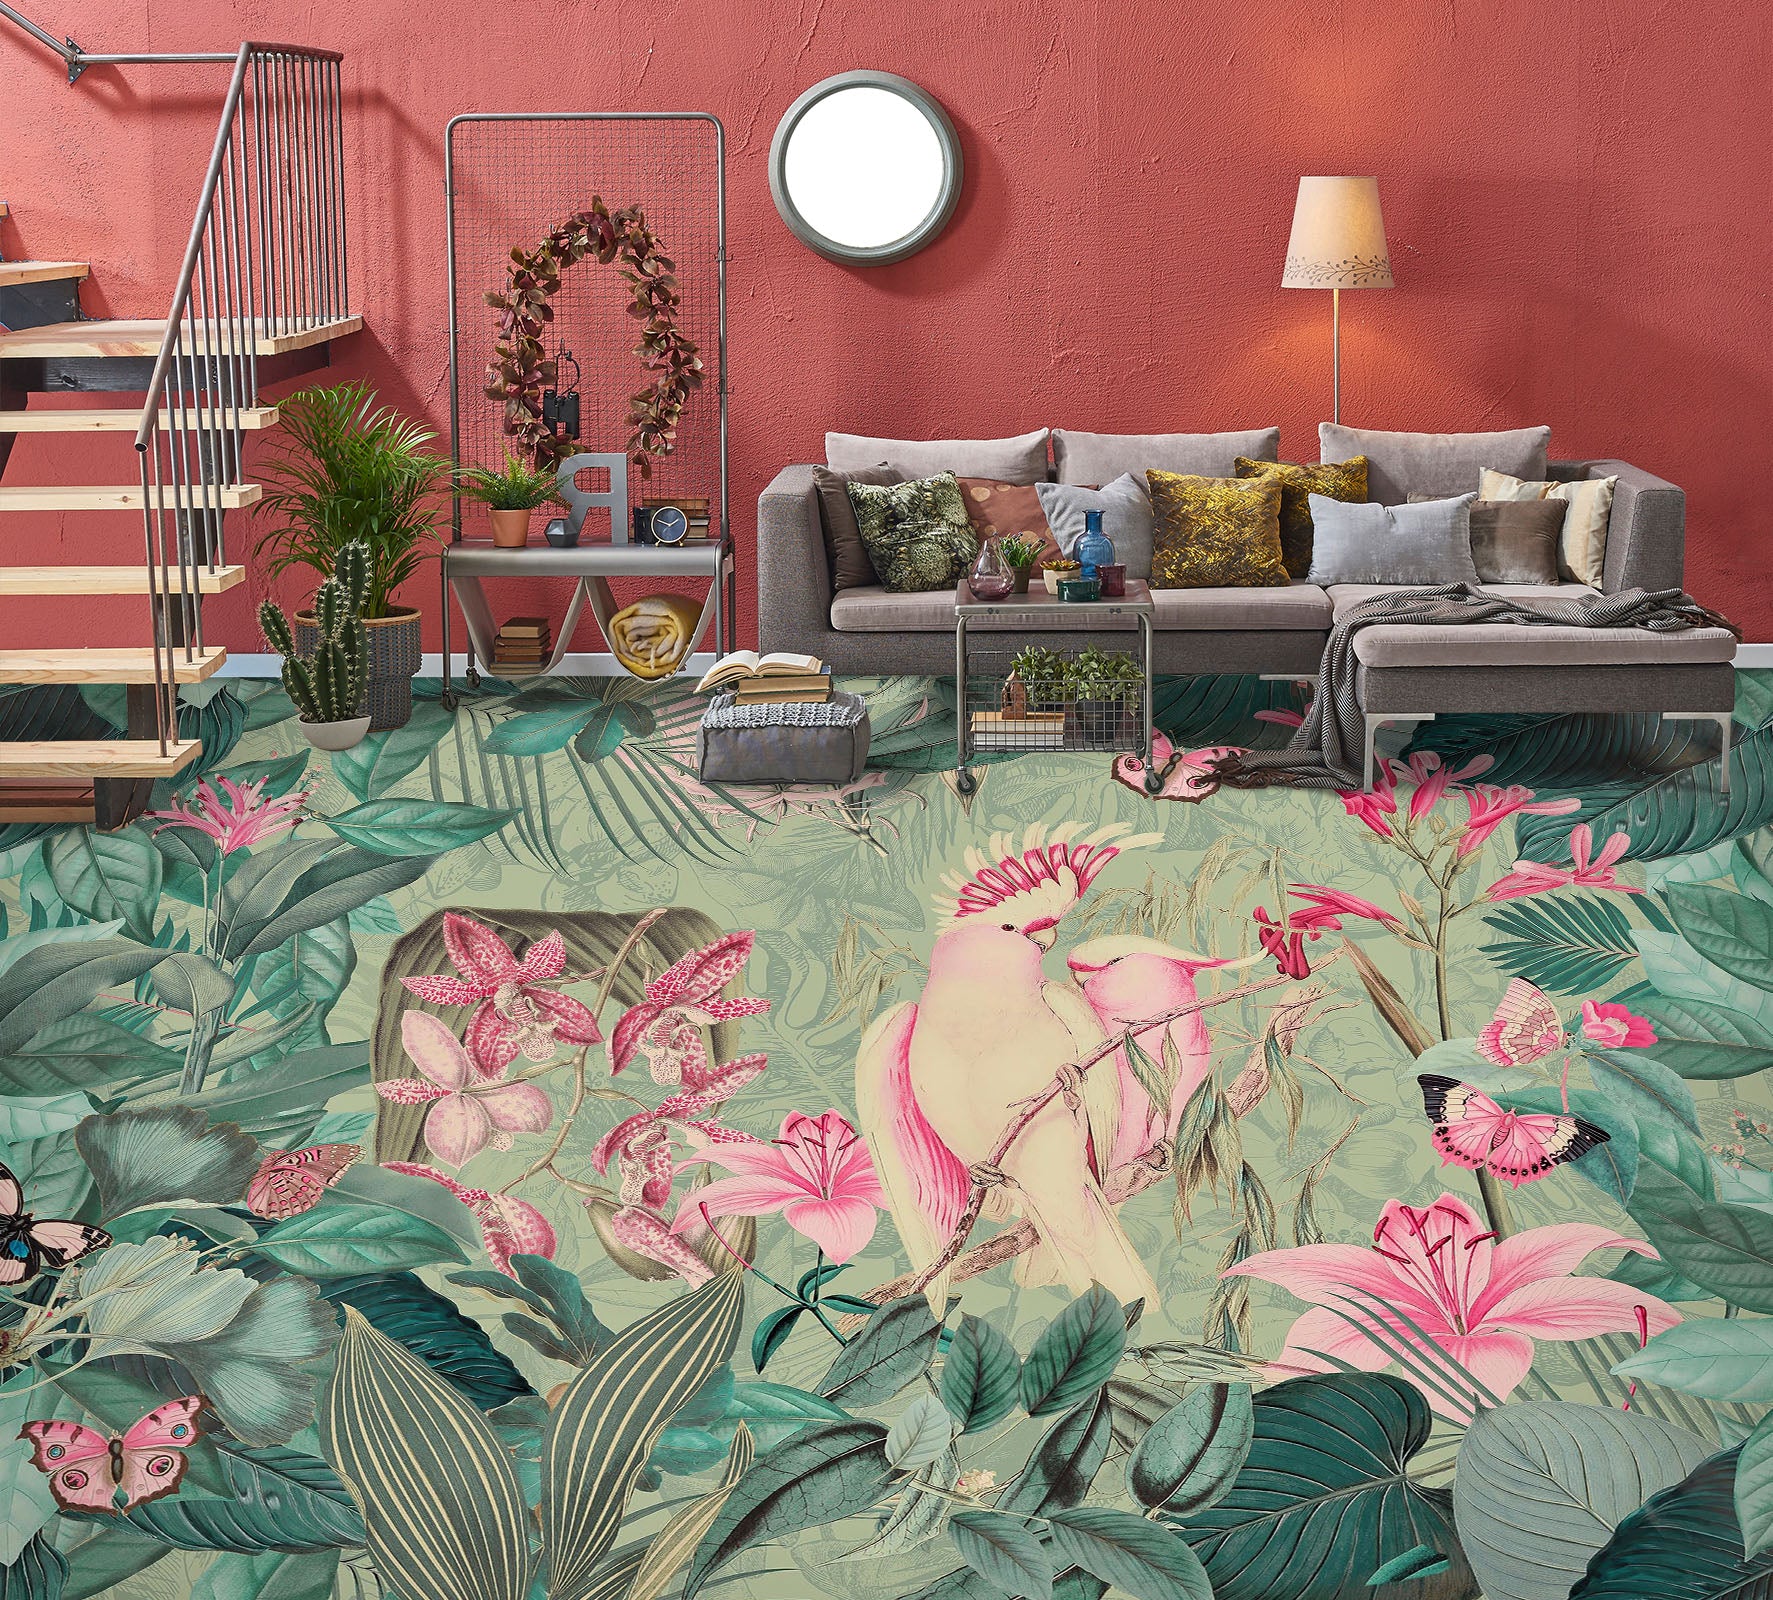 3D Grove Pink Parrot 104140 Andrea Haase Floor Mural  Wallpaper Murals Self-Adhesive Removable Print Epoxy